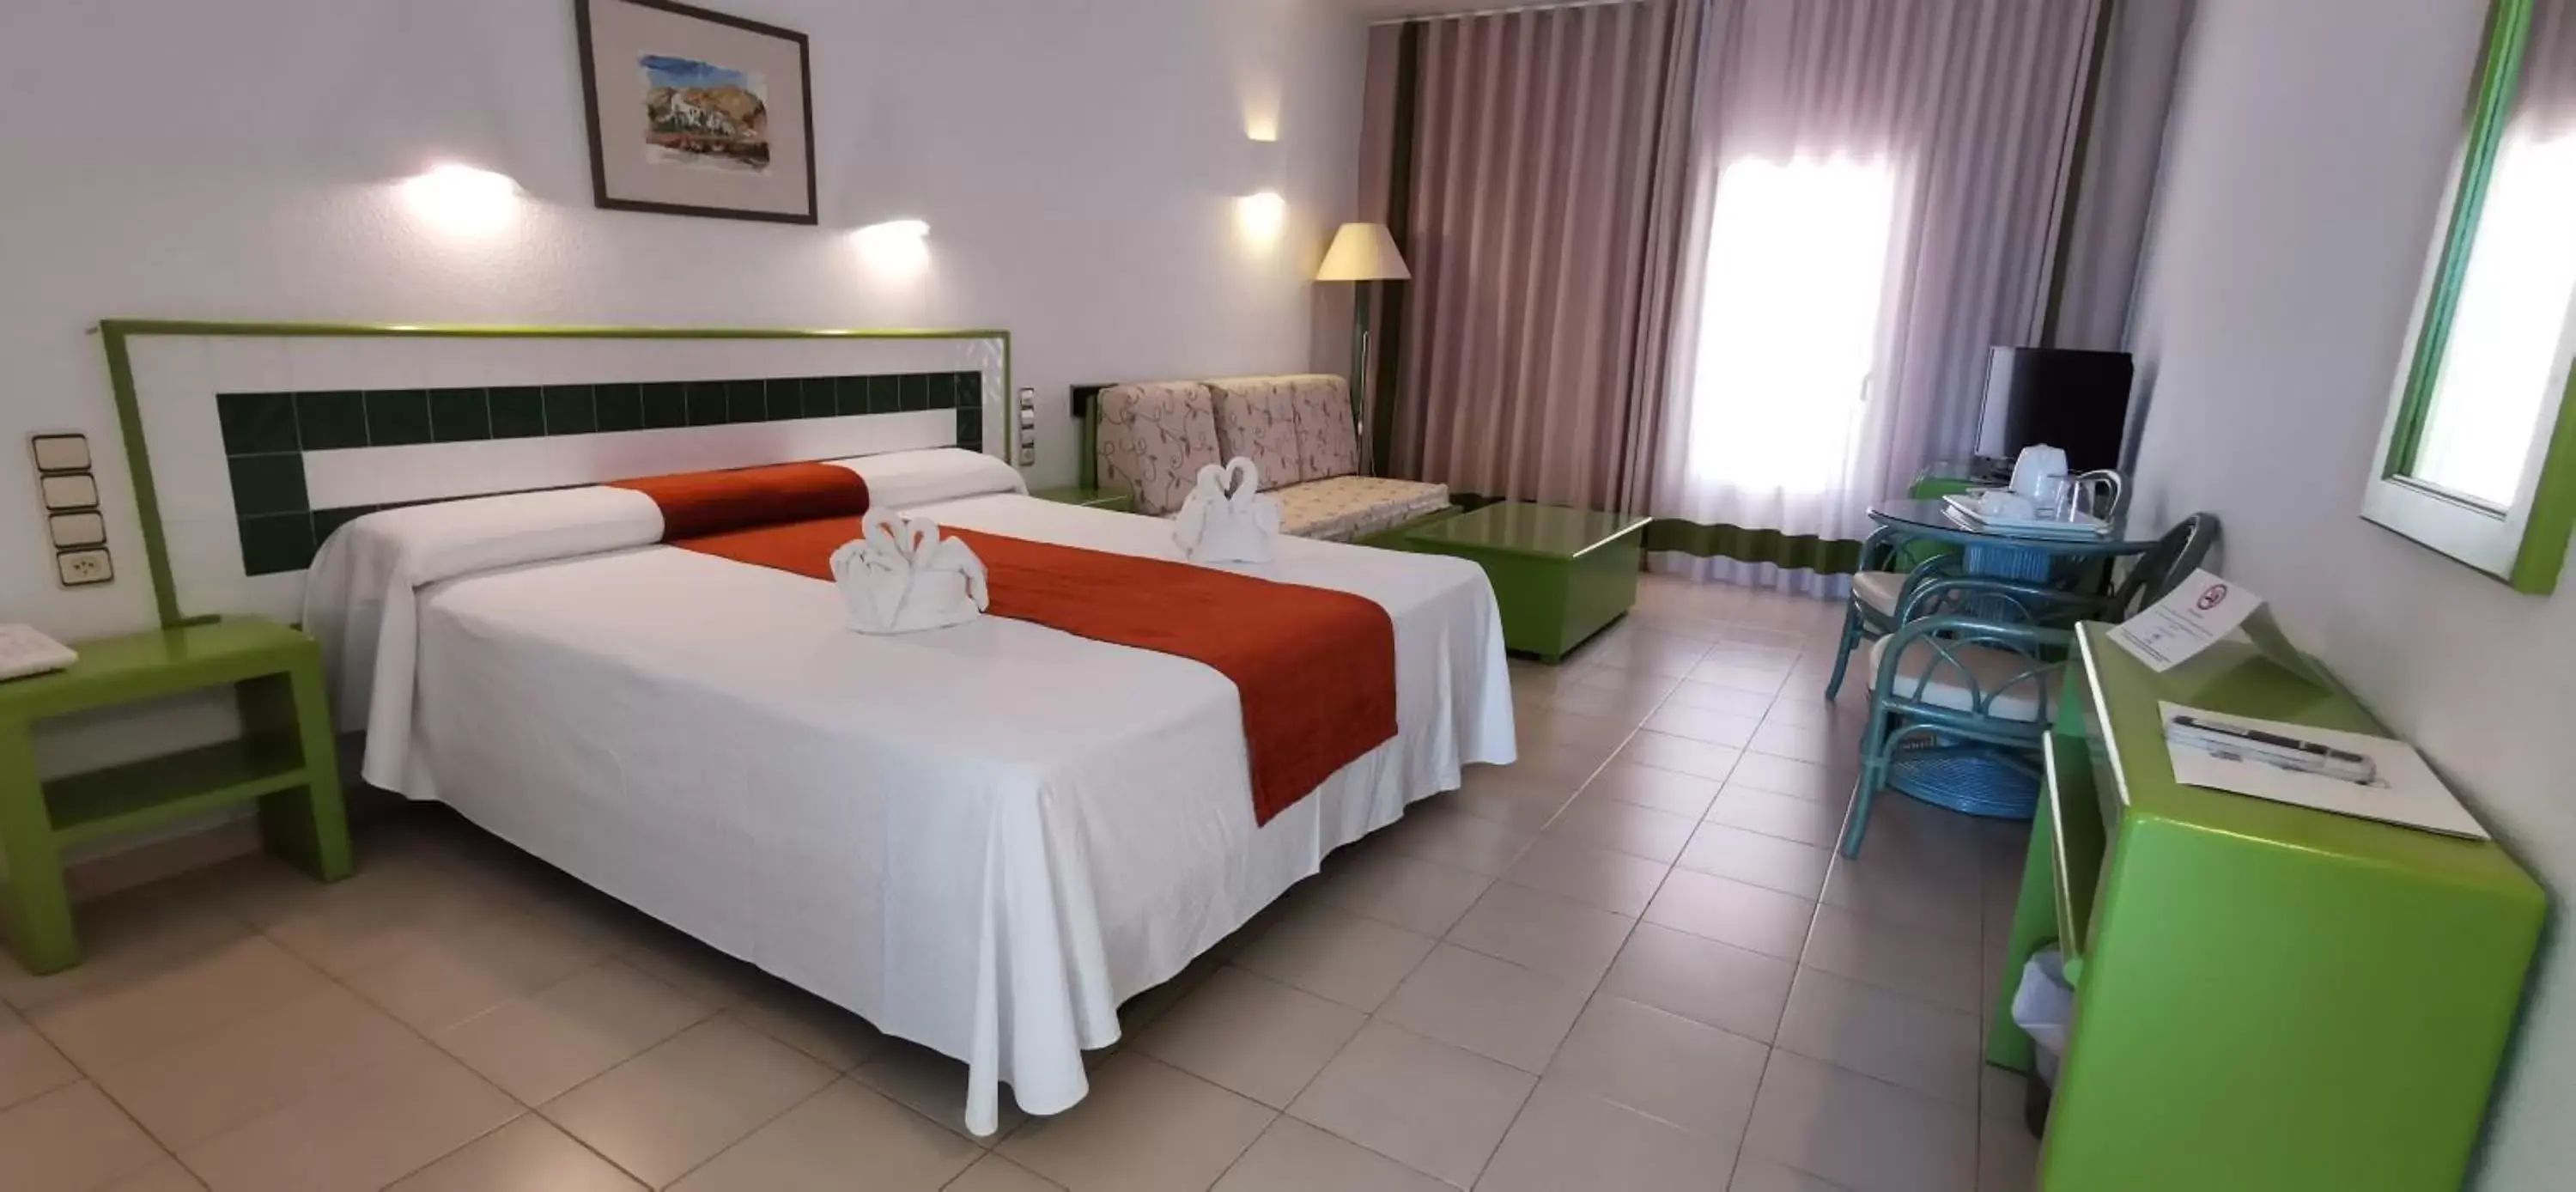 Bedroom in Hotel Puntazo II